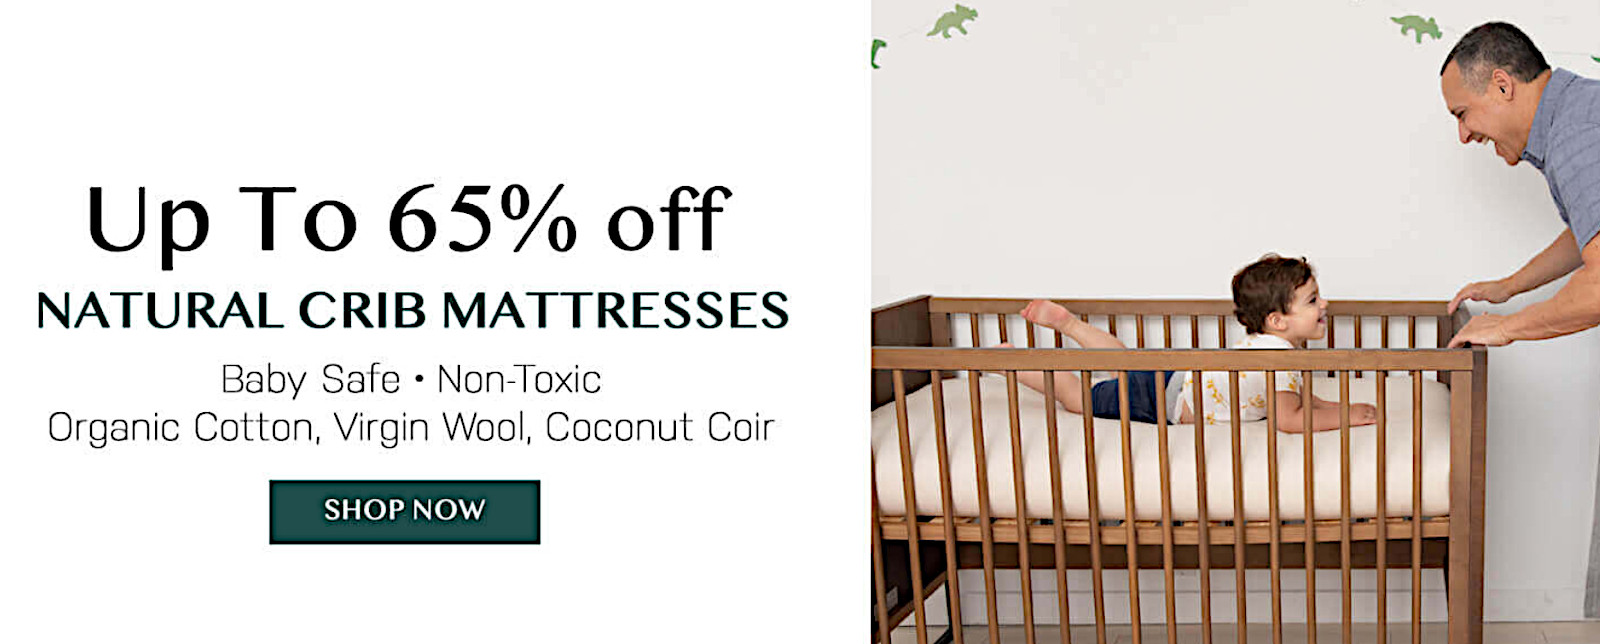 natural crib mattresses bargain